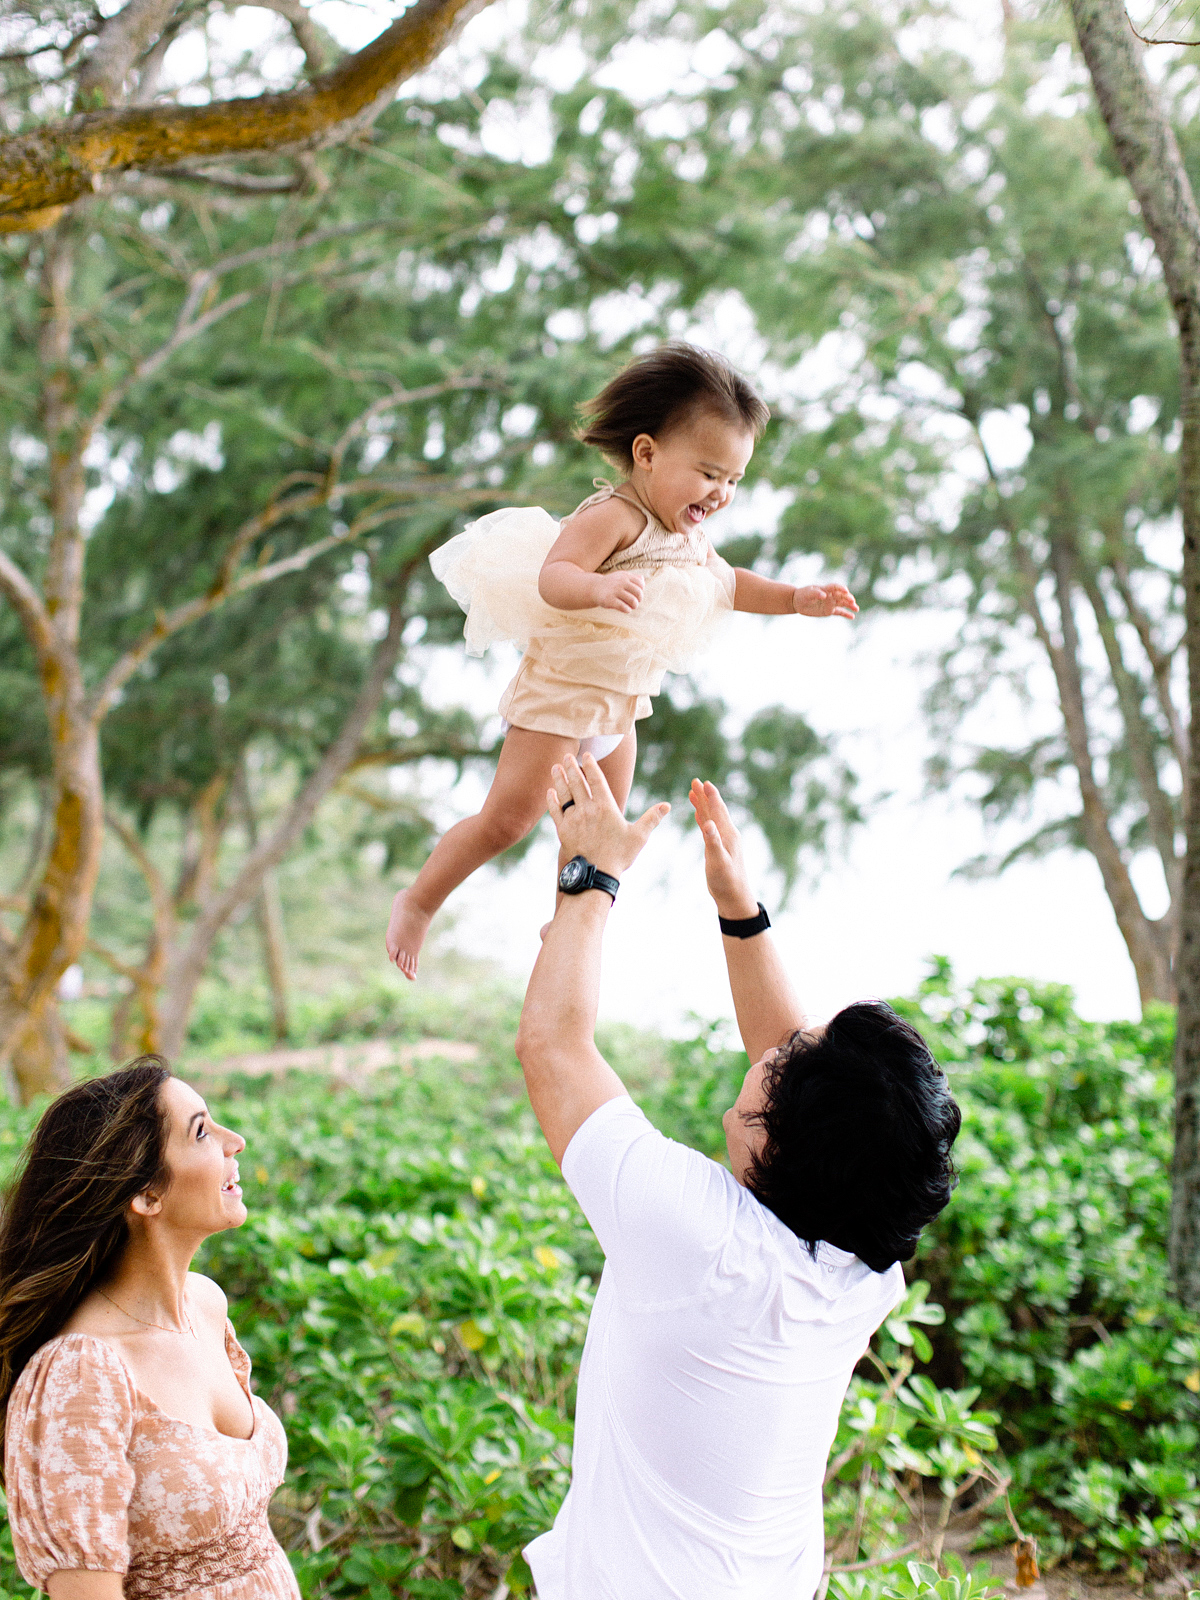 Kailua Family Photographer | Photography by Oahu Film Photographer, Laura Ivanova